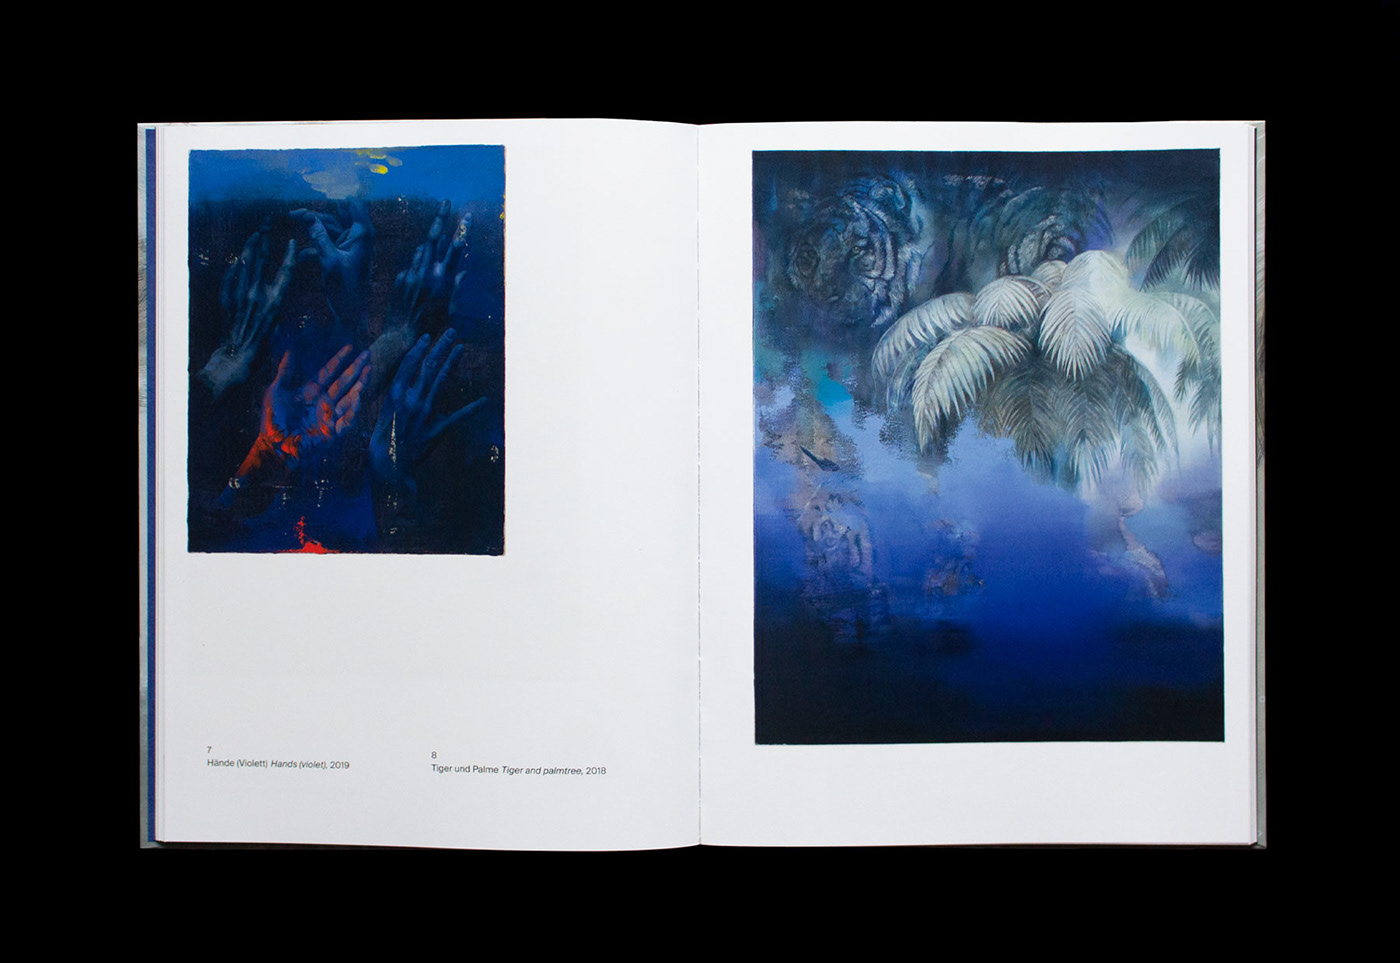 art artistbook book design Catalogue dutoit Exhibition  isabelle Dutoit painter